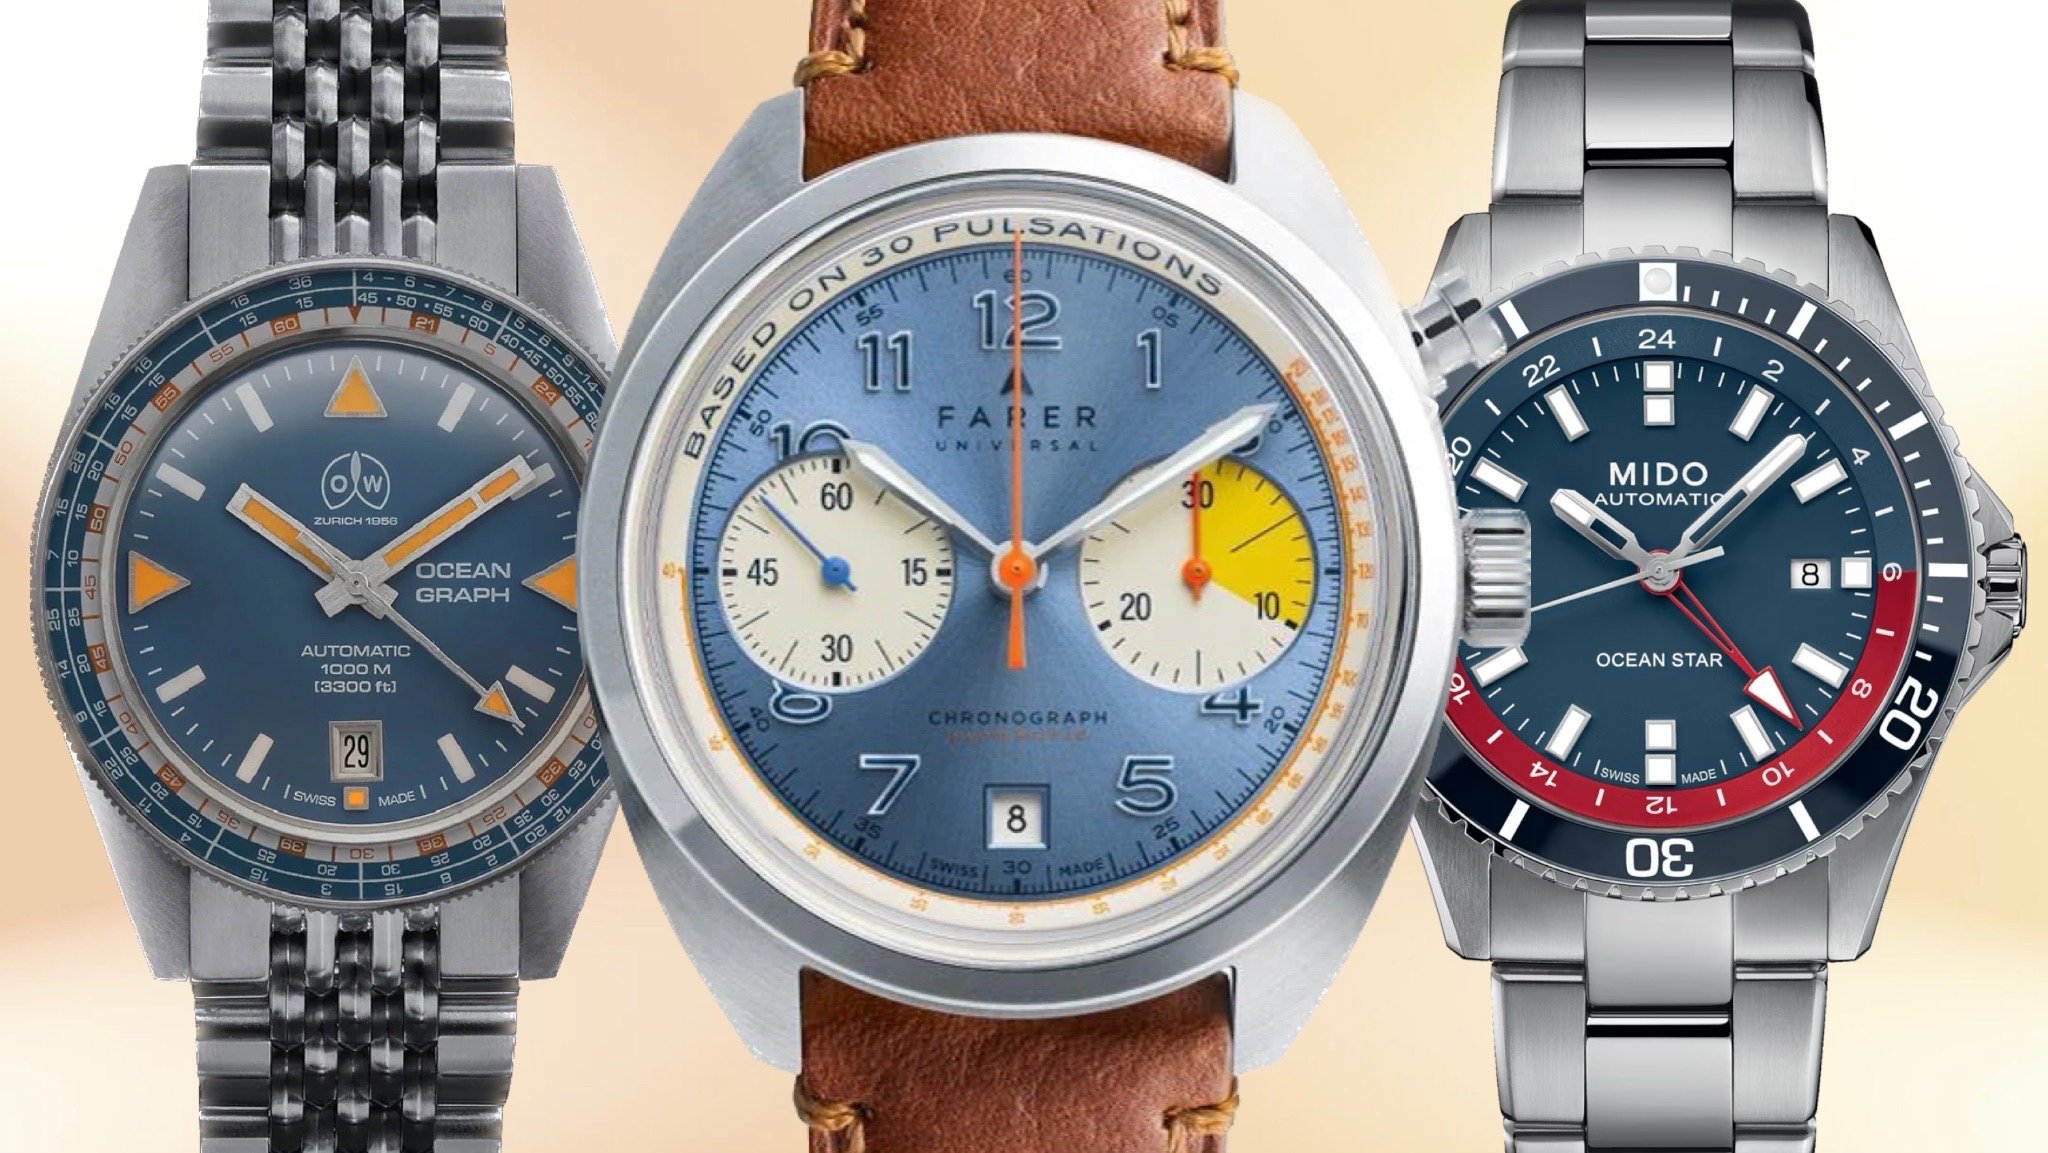 GOLDEN HOUR Mens Watch Fashion Sleek Minimalist Quartz Analog Mesh  Stainless Steel Waterproof Chronograph Watches for Men with Auto Date